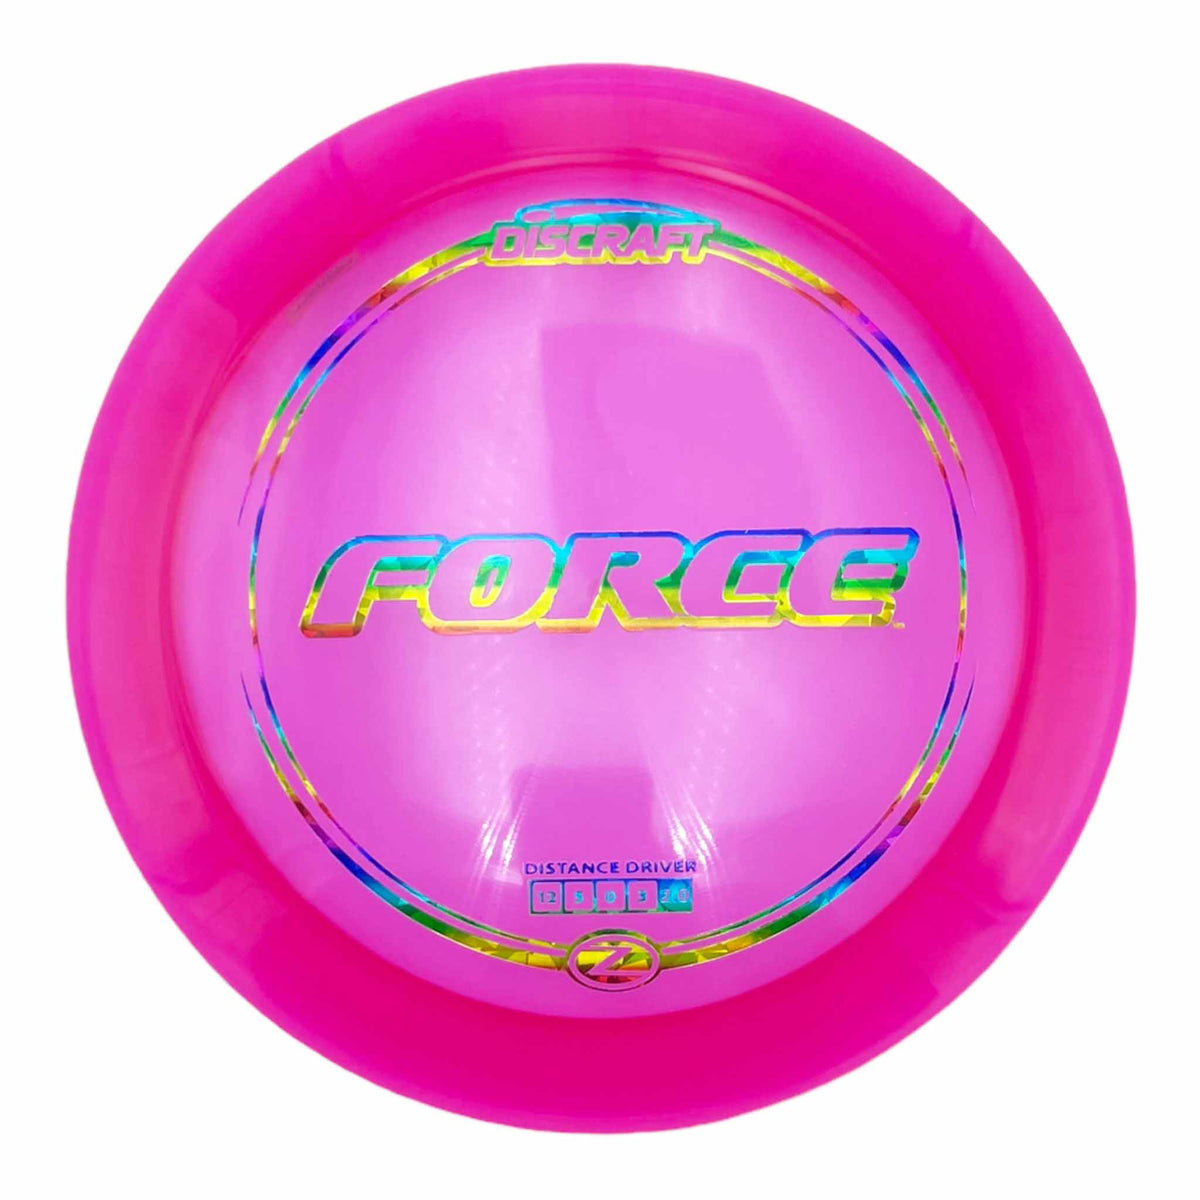 Discraft Z Line Force distance driver - Pink / Rainbow